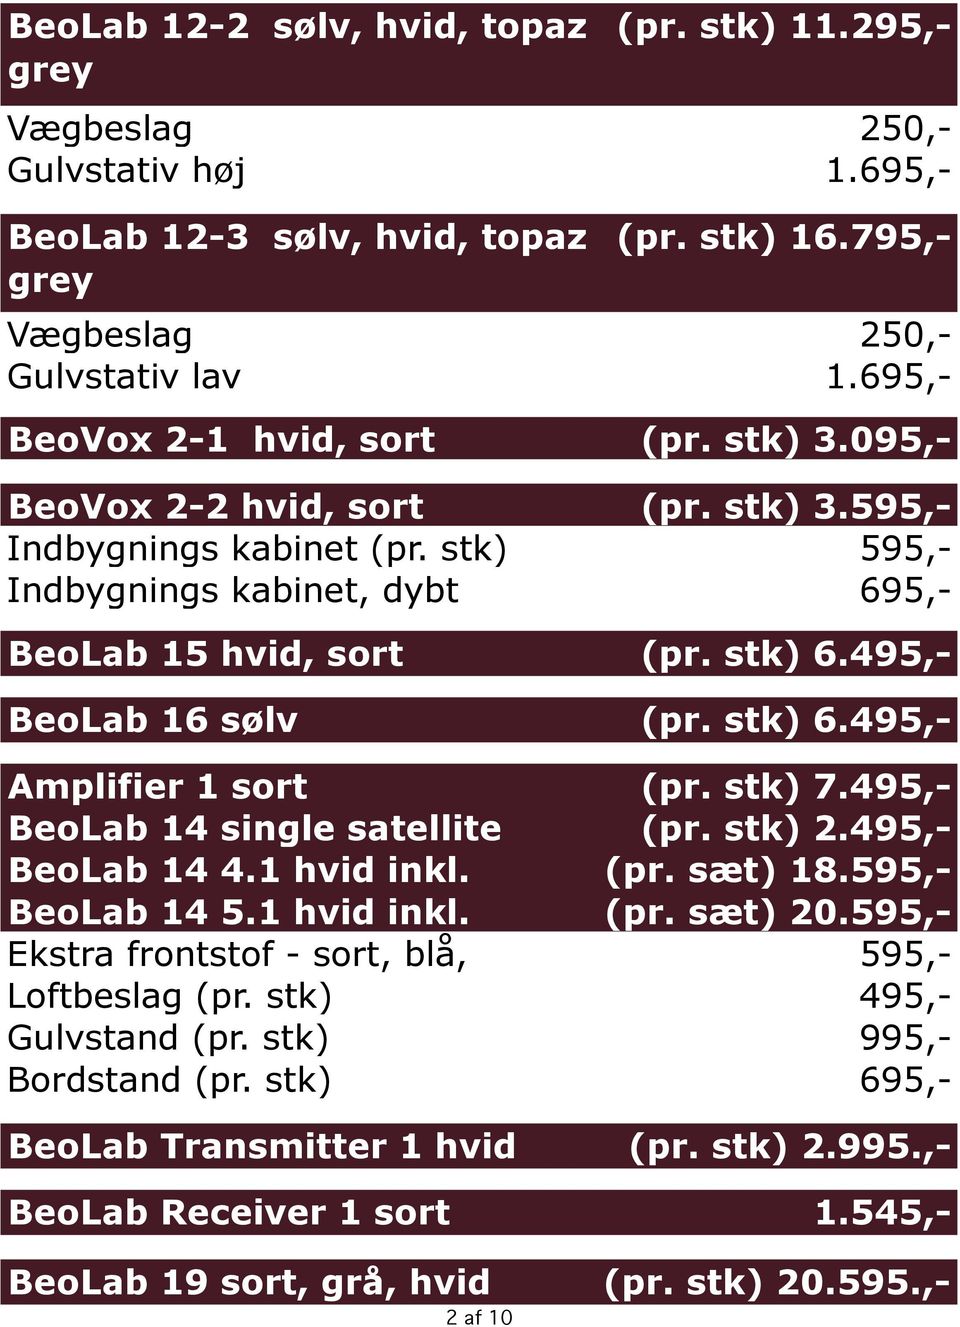 495,- BeoLab 16 sølv (pr. stk) 6.495,- Amplifier 1 sort (pr. stk) 7.495,- BeoLab 14 single satellite (pr. stk) 2.495,- BeoLab 14 4.1 hvid inkl. (pr. sæt) 18.595,- BeoLab 14 5.1 hvid inkl. (pr. sæt) 20.